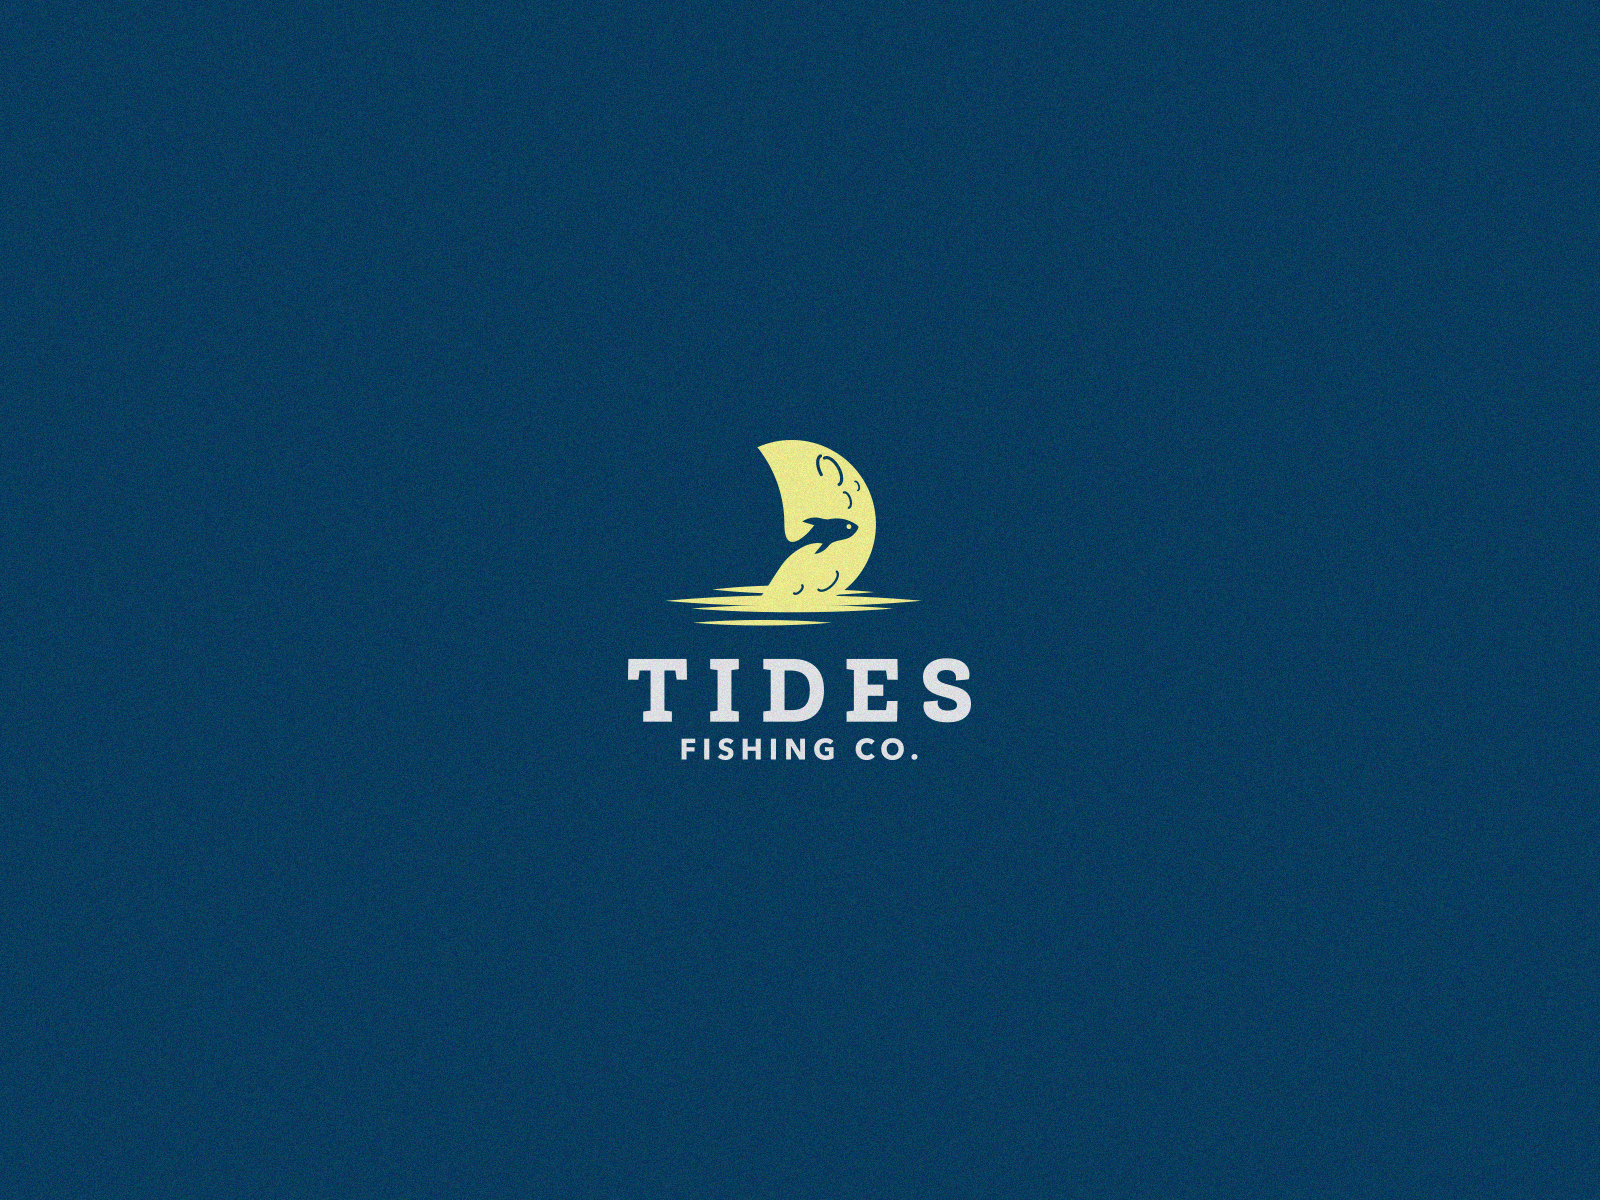 Tides Fishing Logo - USA by udosio on Dribbble